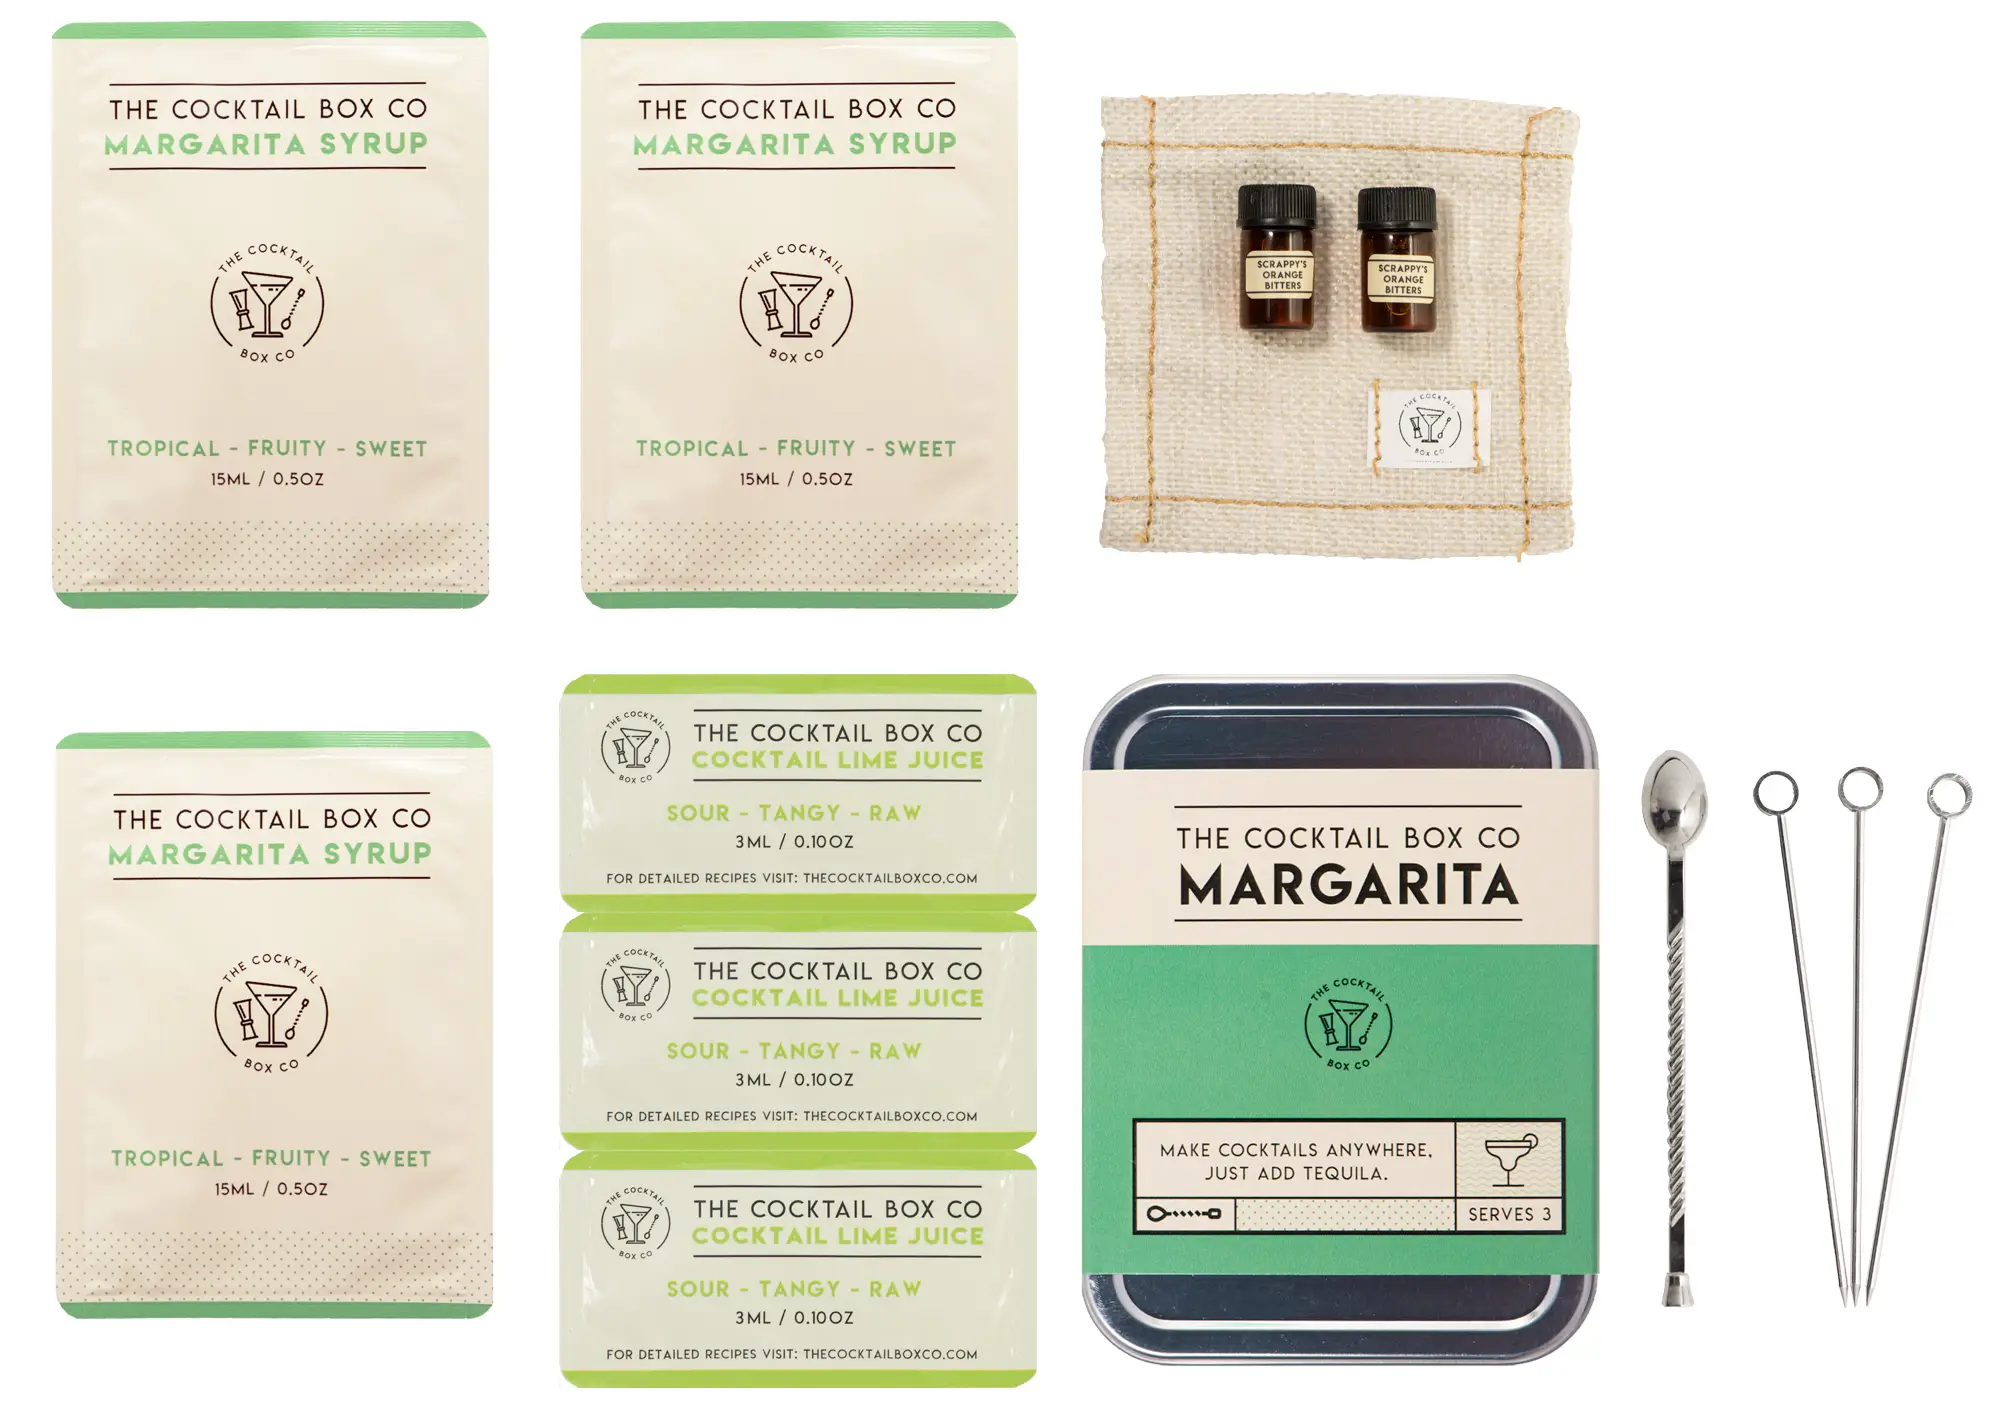 The Margarita Cocktail Kit